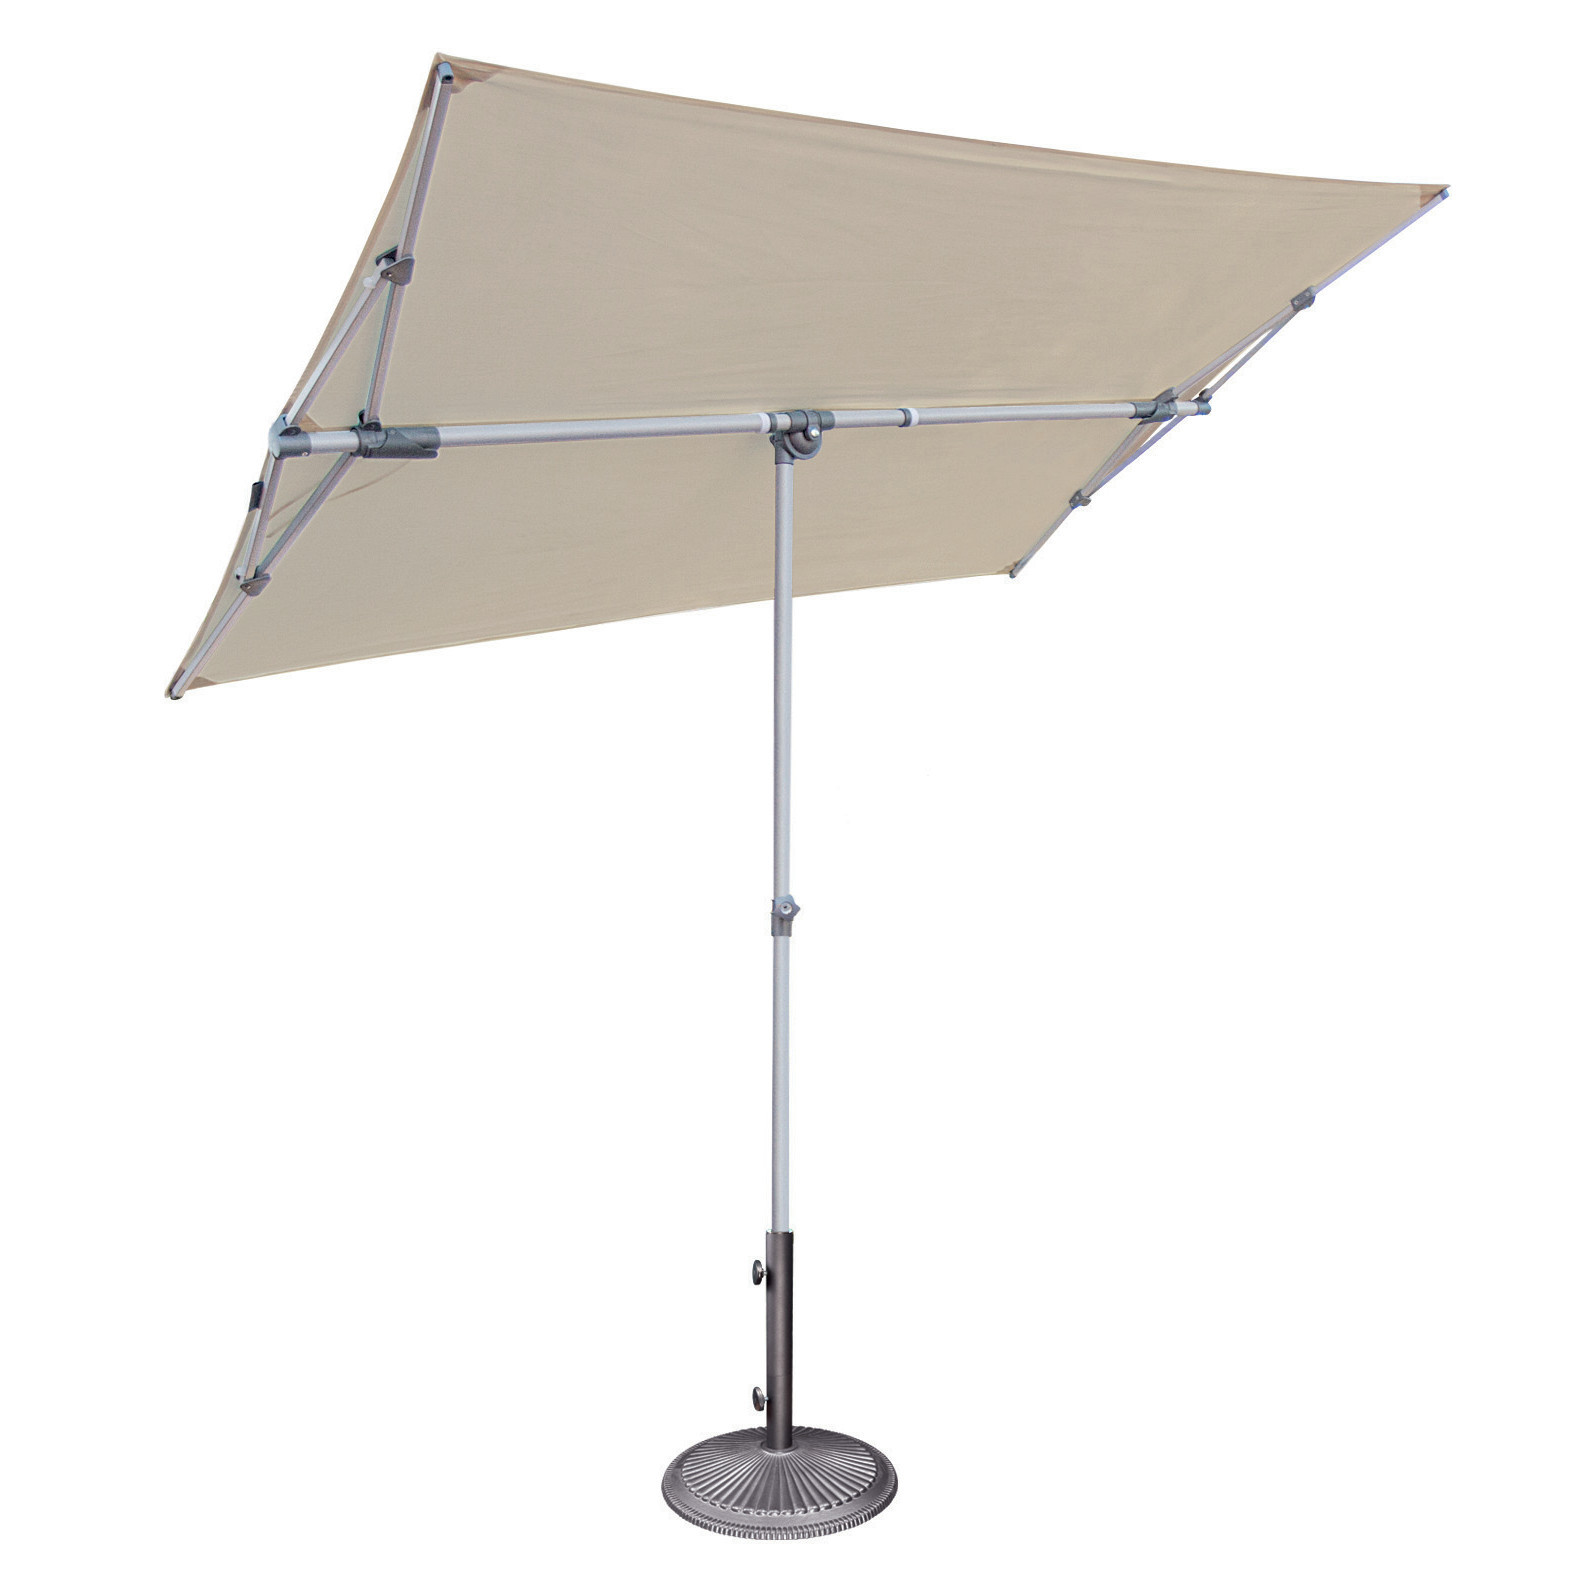 Best ideas about Rectangular Patio Umbrellas
. Save or Pin SimplyShade 5 x 7 Rectangular Market Umbrella & Reviews Now.